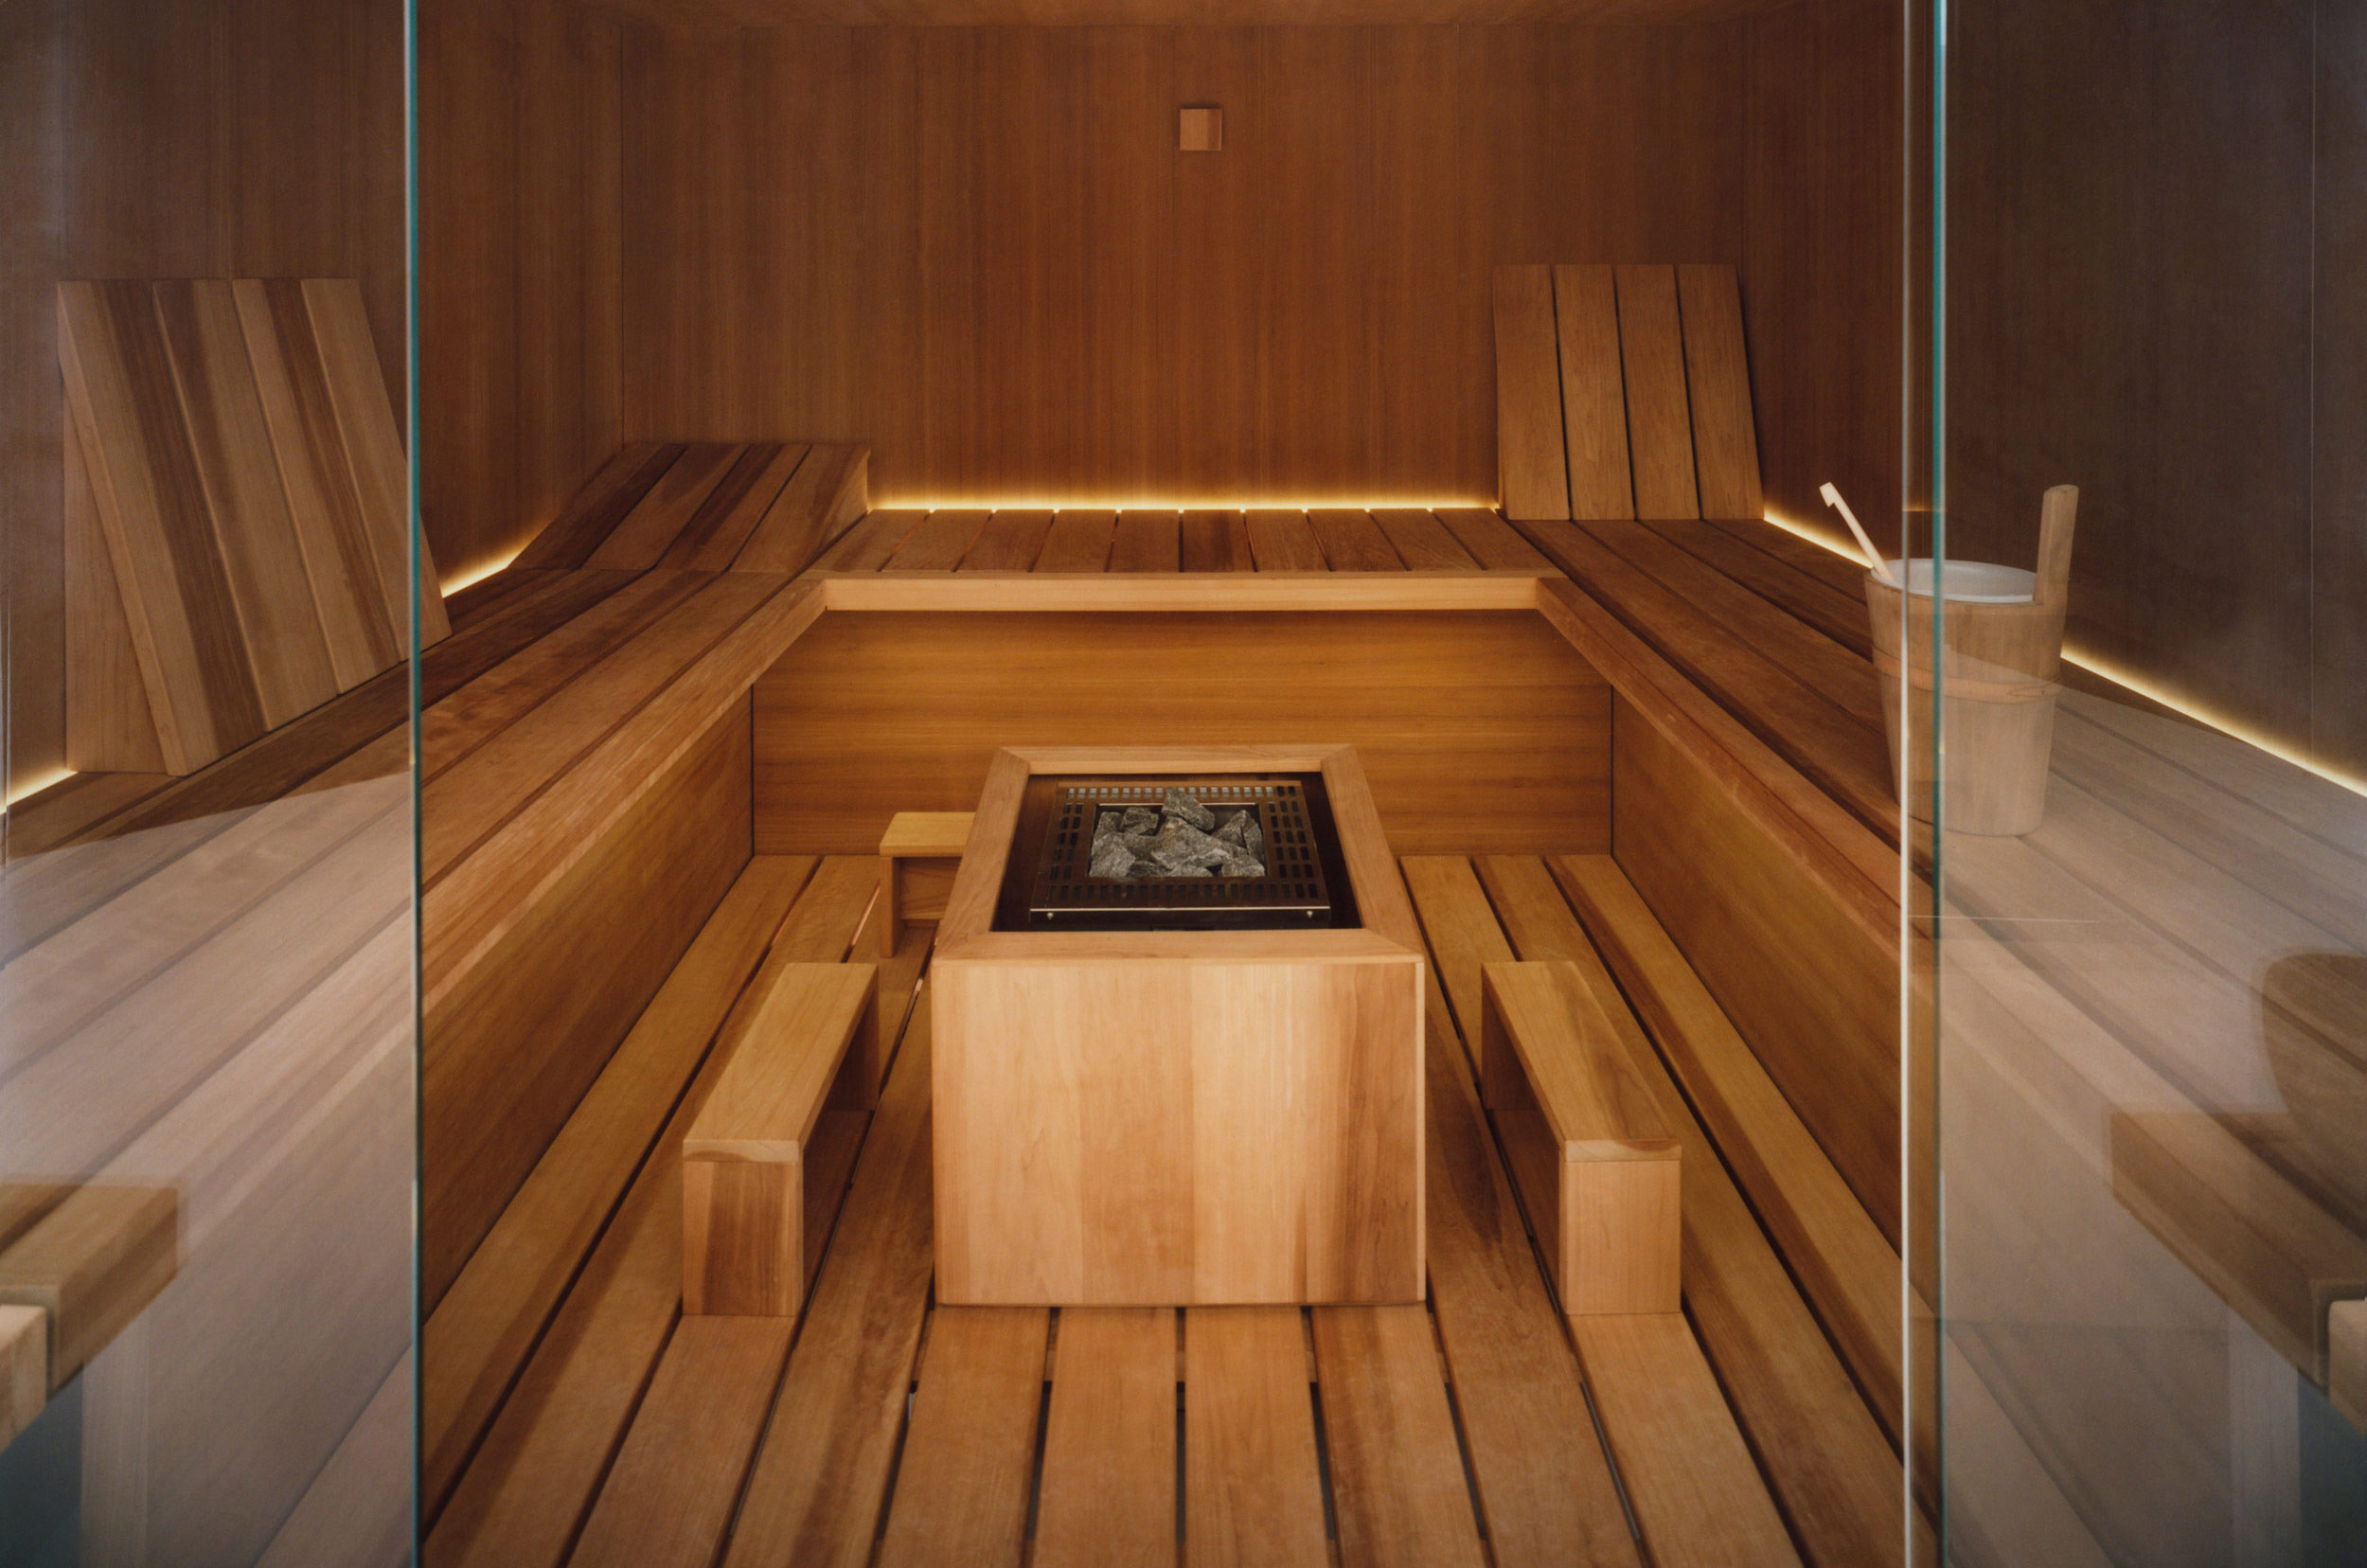 effegibi-sauna-kopen-turnhout-antwerpen-hanolux.jpg